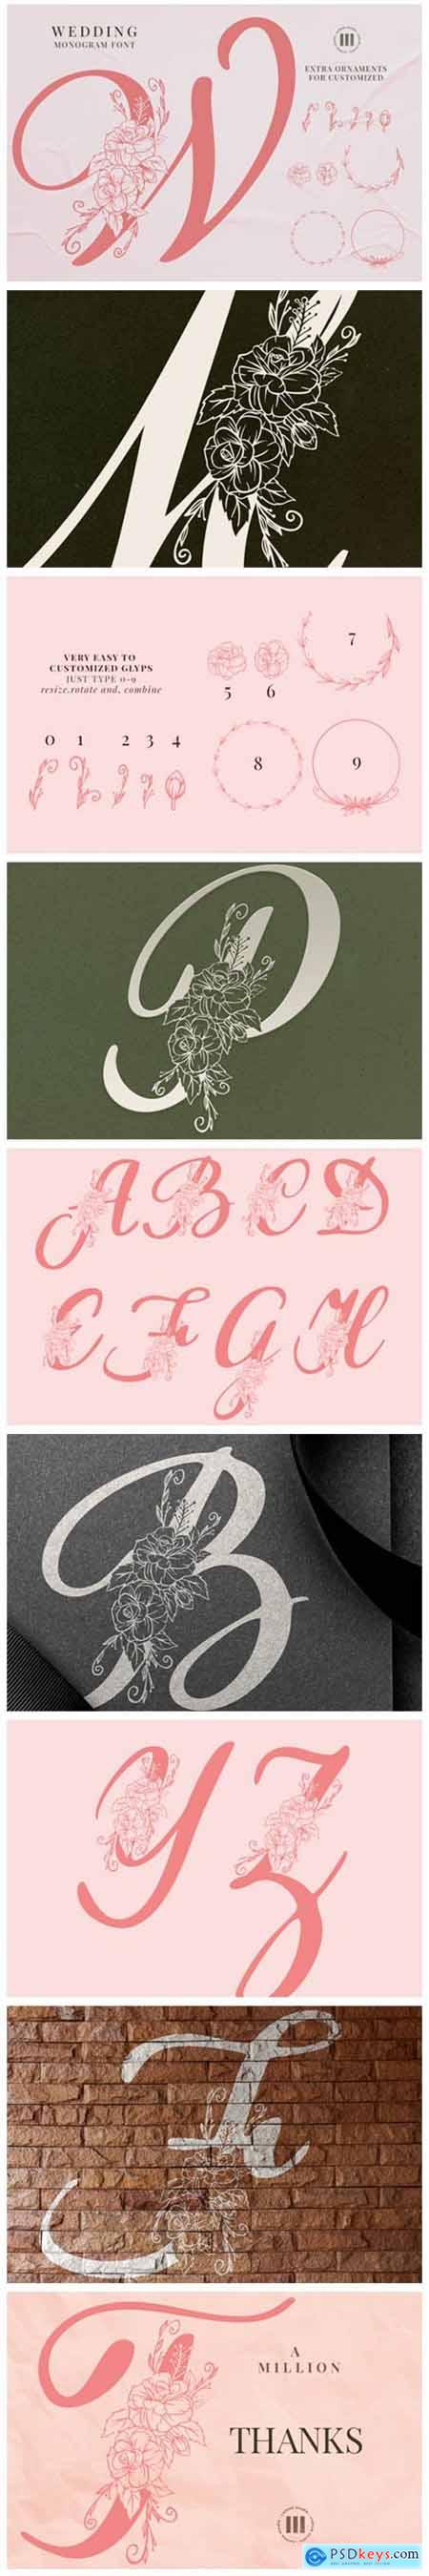 Wedding Monogram Font